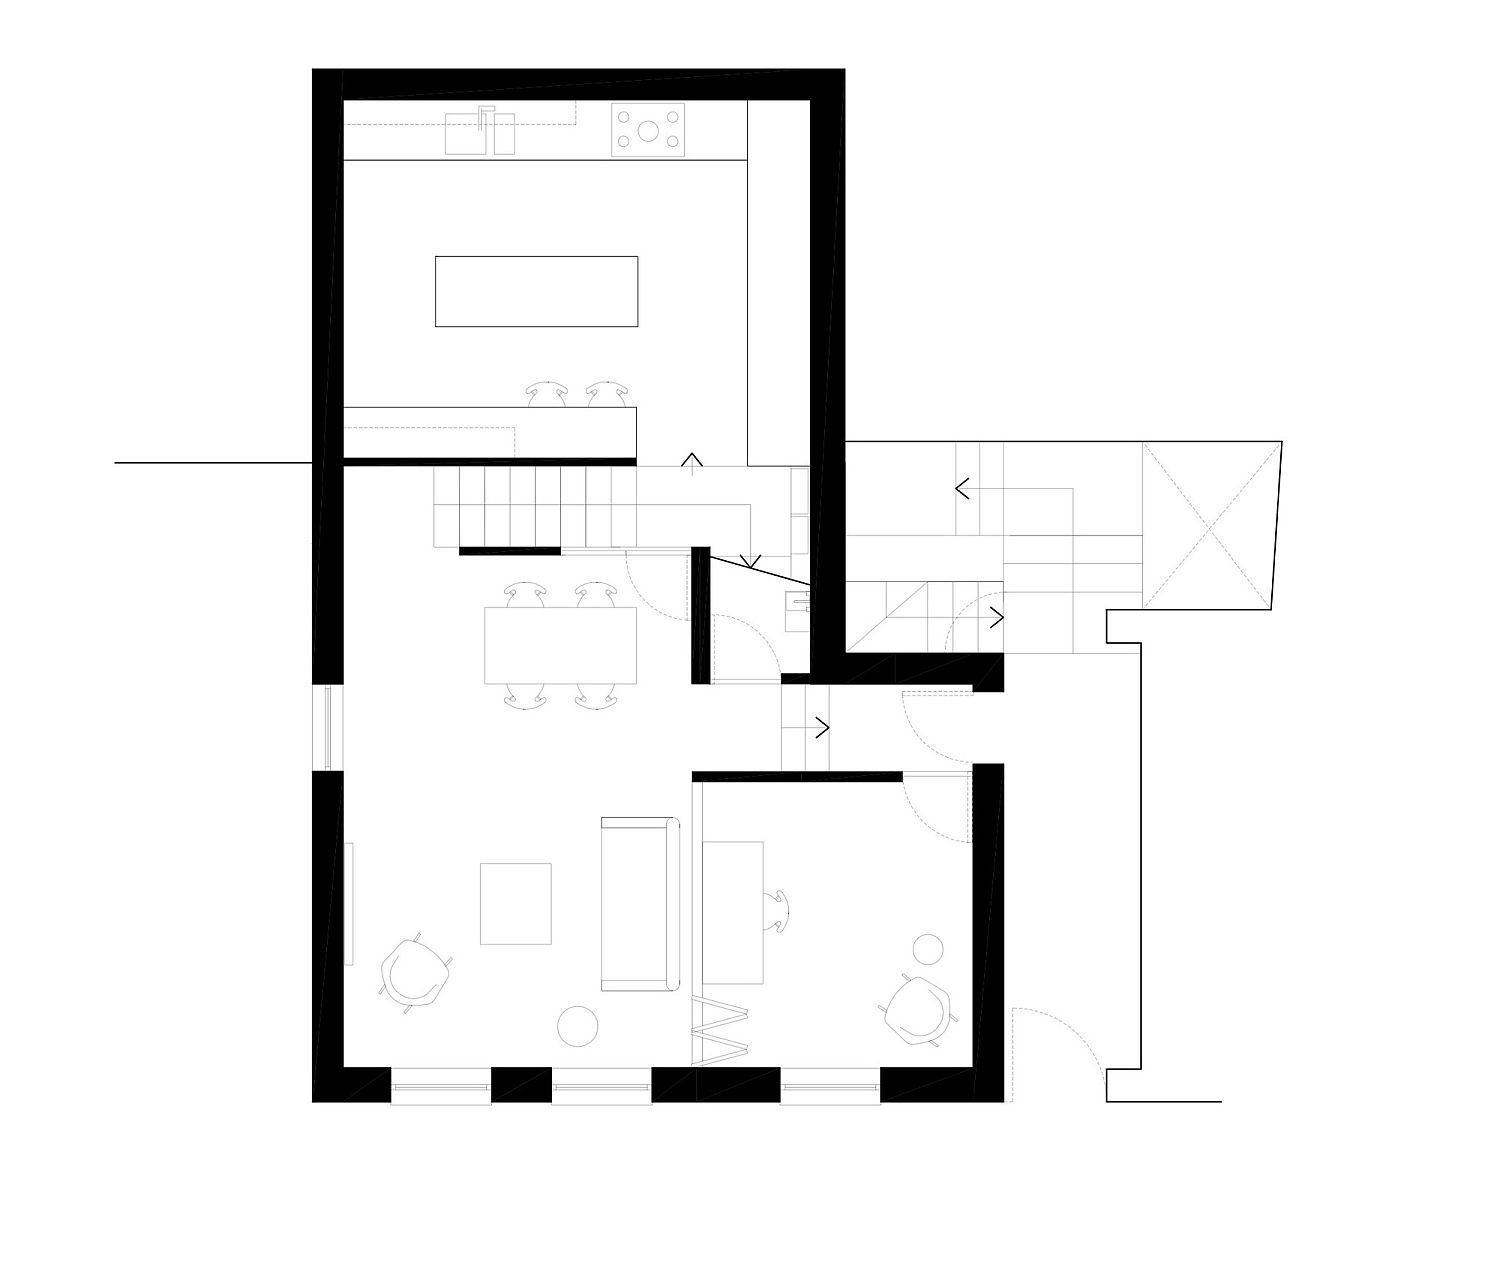 Floor plan of ground floor of the revamped London home